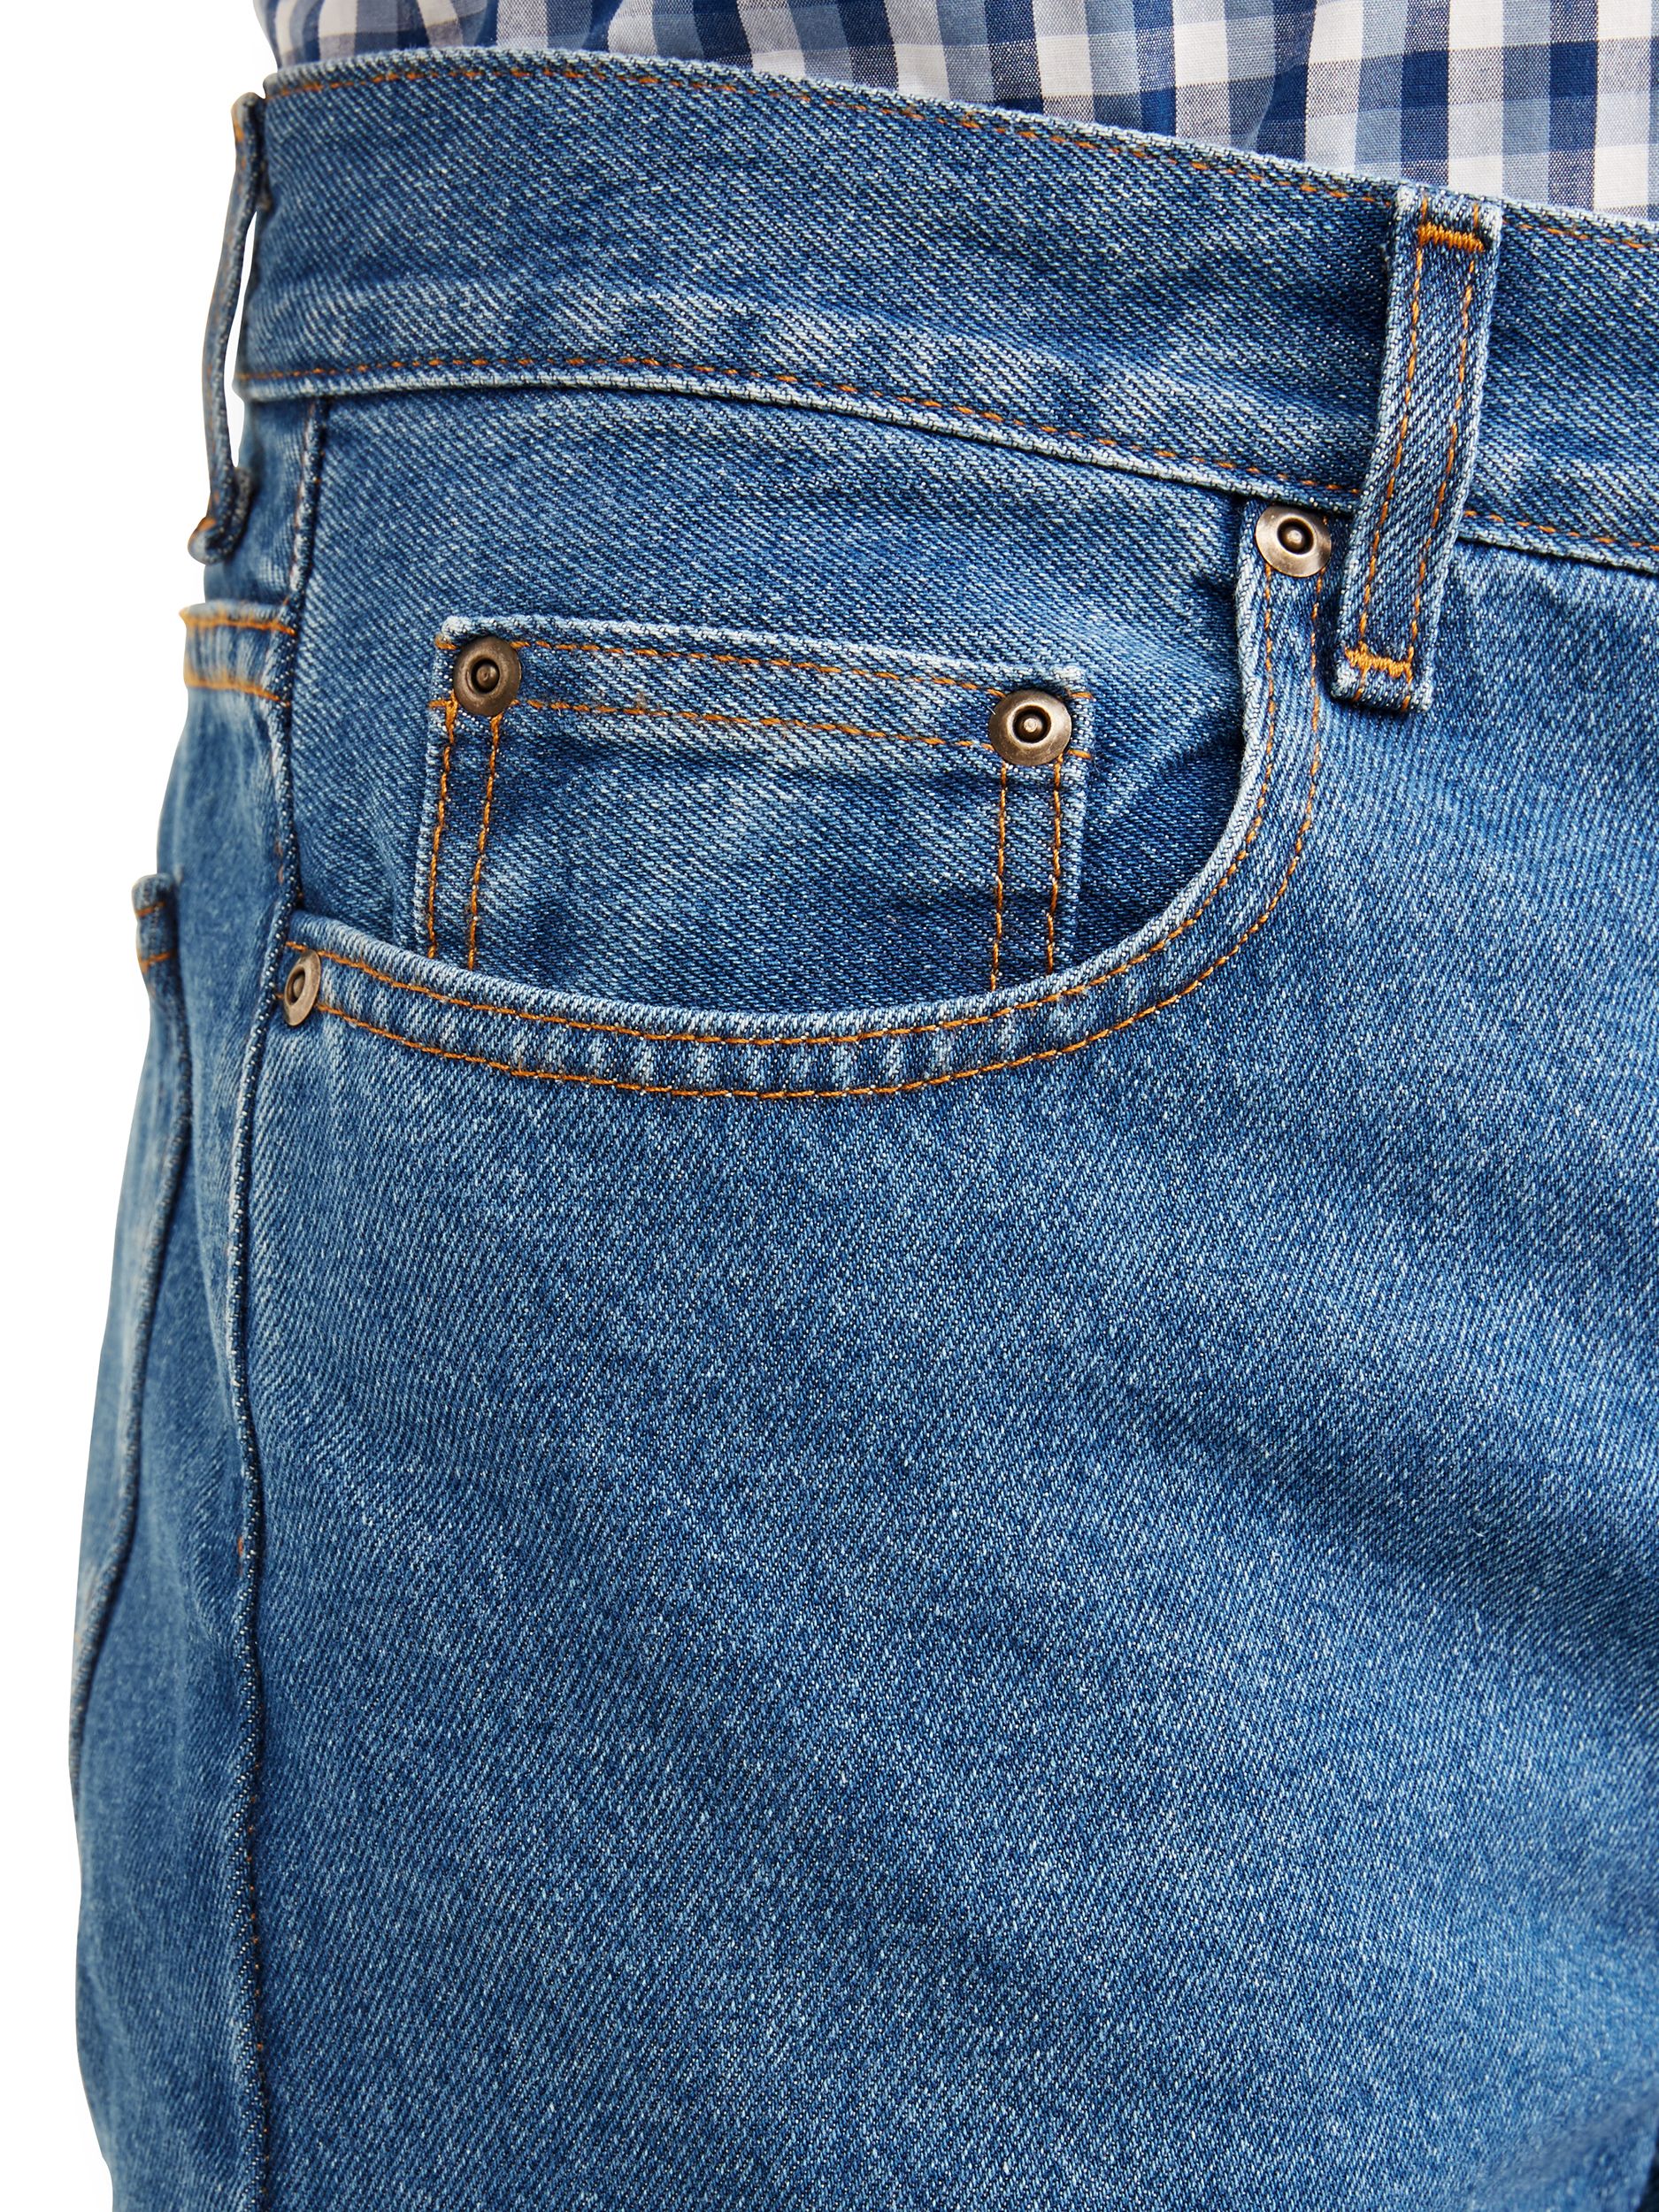 George Men's and Big Men's 100% Cotton Regular Fit Jeans - image 4 of 9